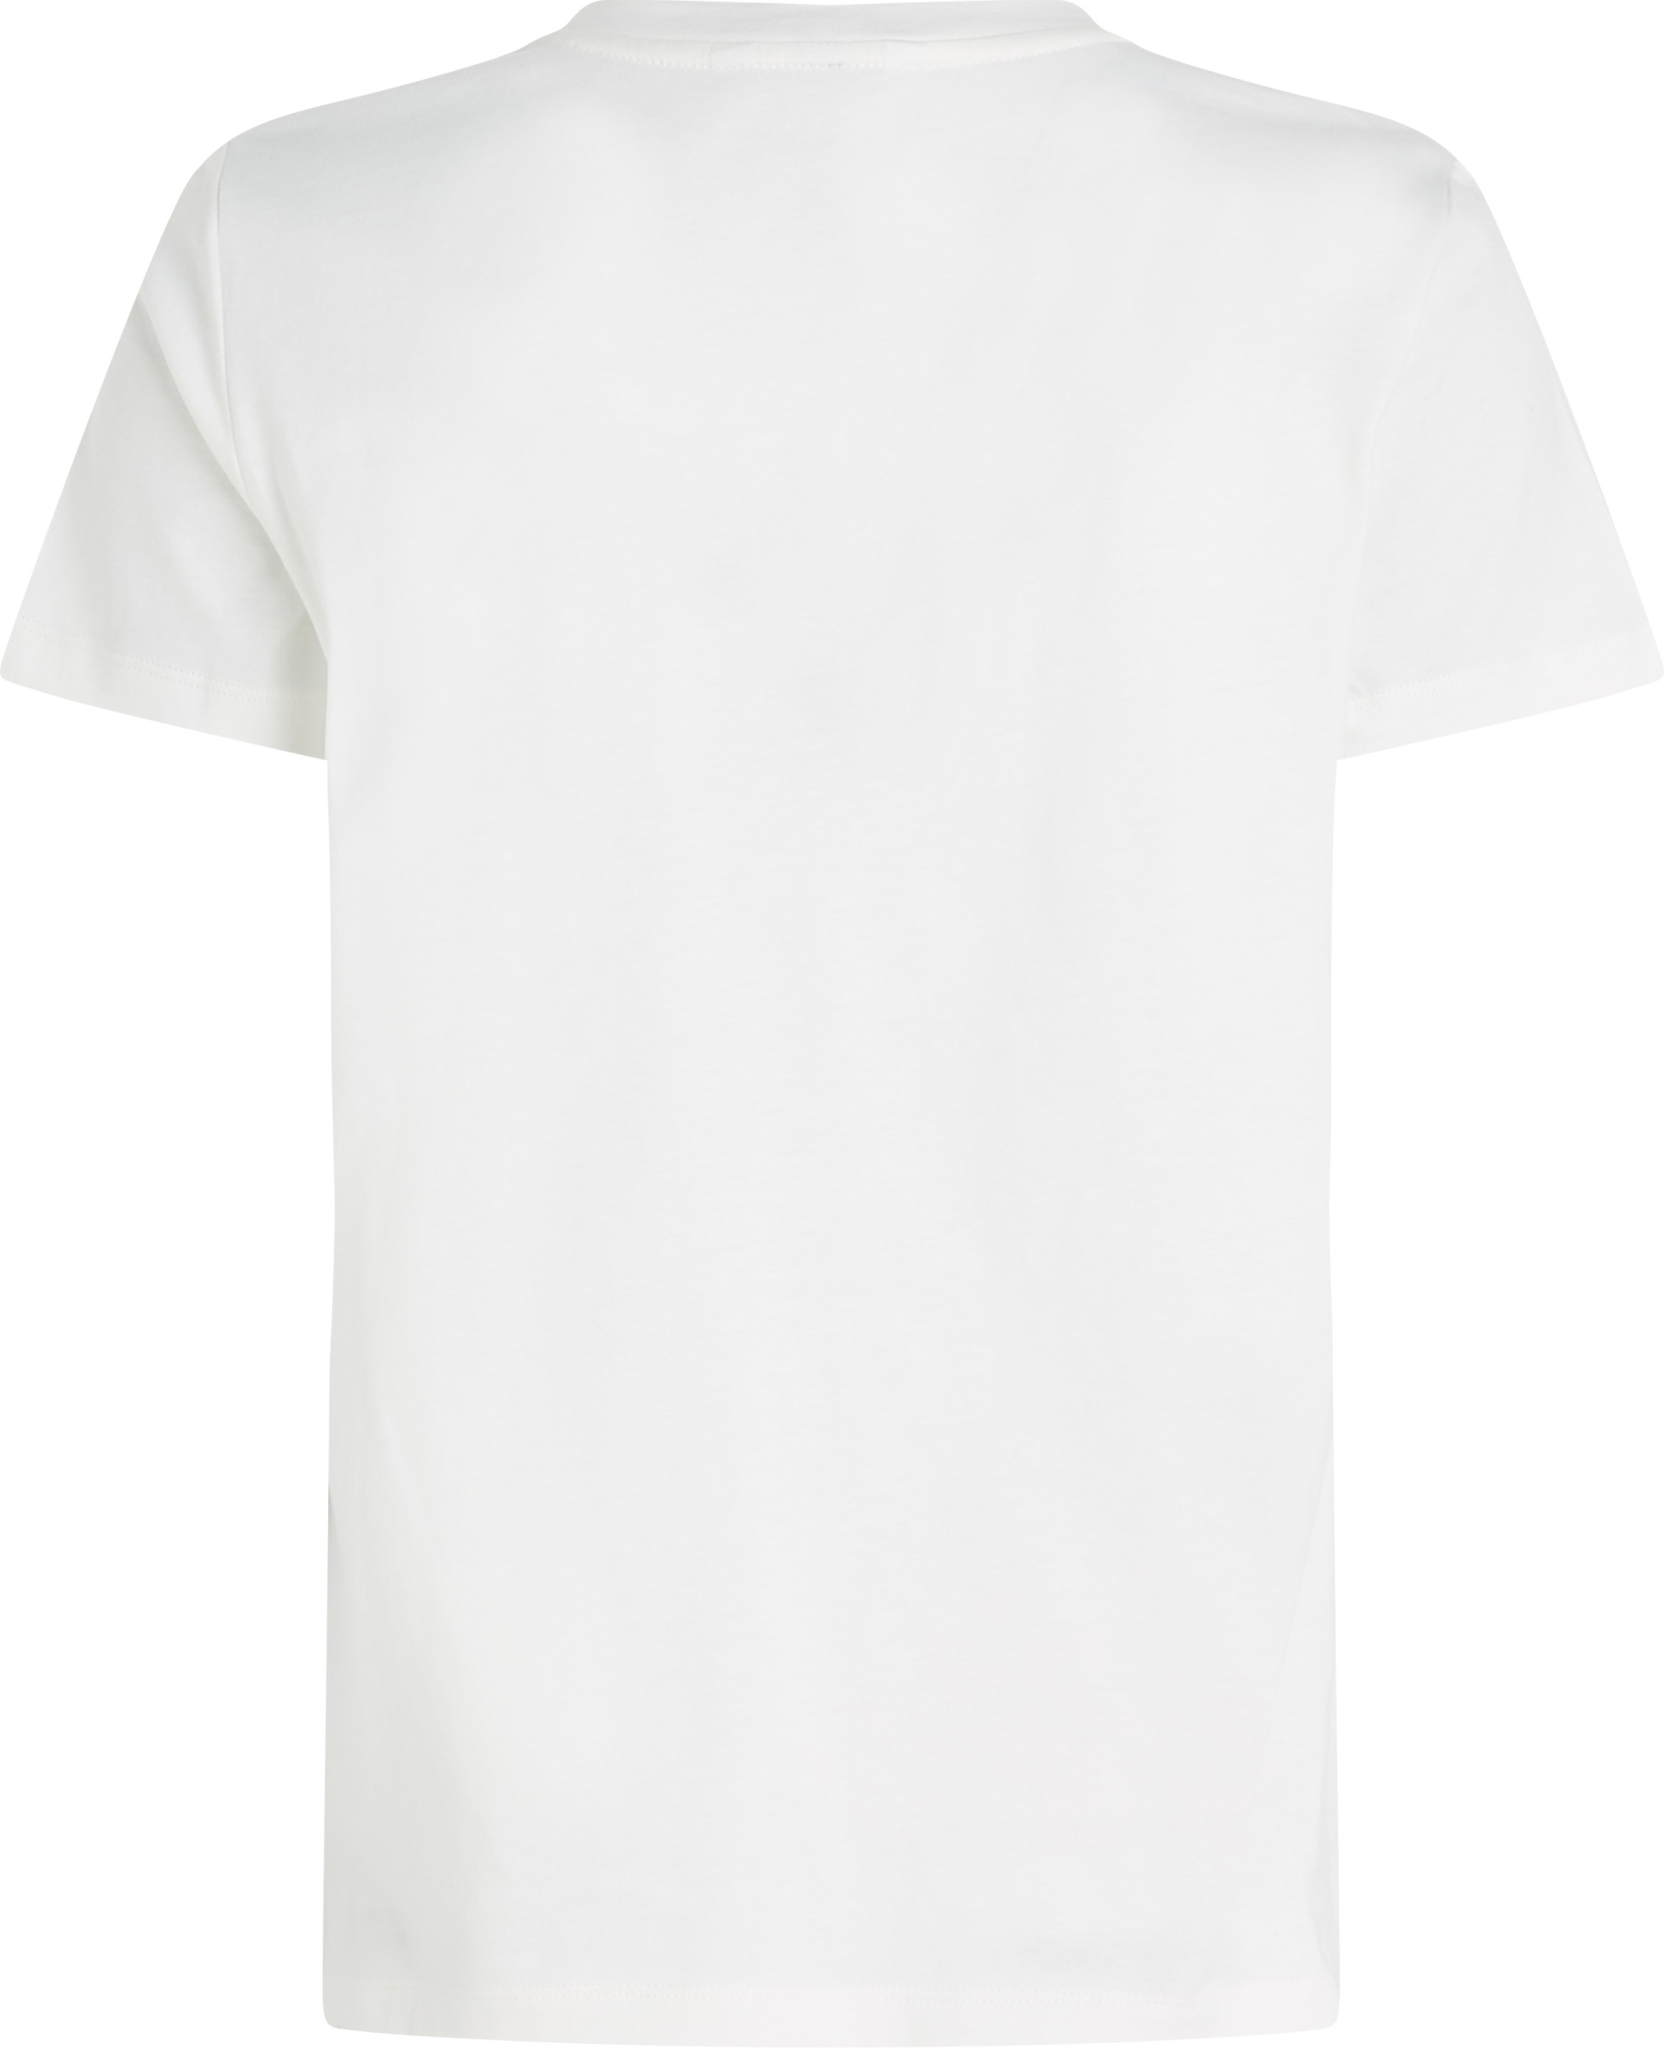 TOMMY HILFIGER CURVE T-Shirt 10684005